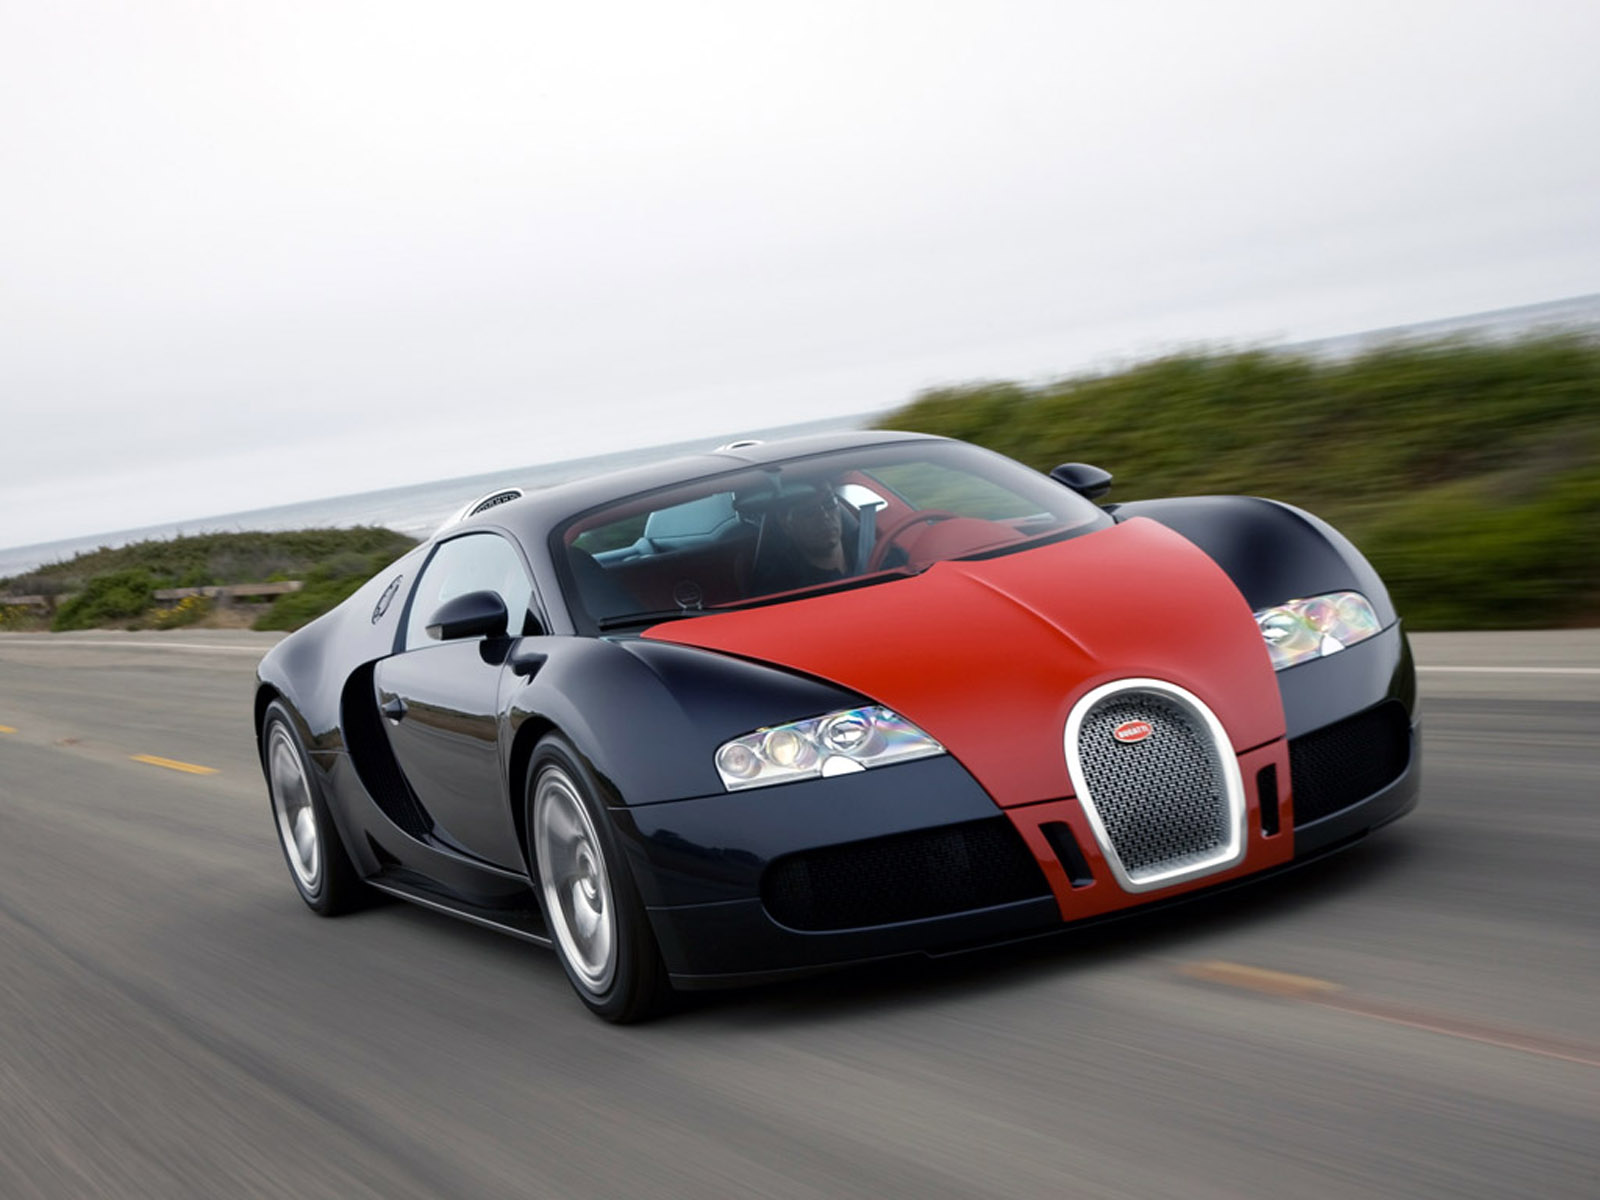 http://www.thesupercars.org/wp-content/gallery/bugatti-veyron/2009-bugatti-164-veyron-fbg-par-hermes-full-view.jpg